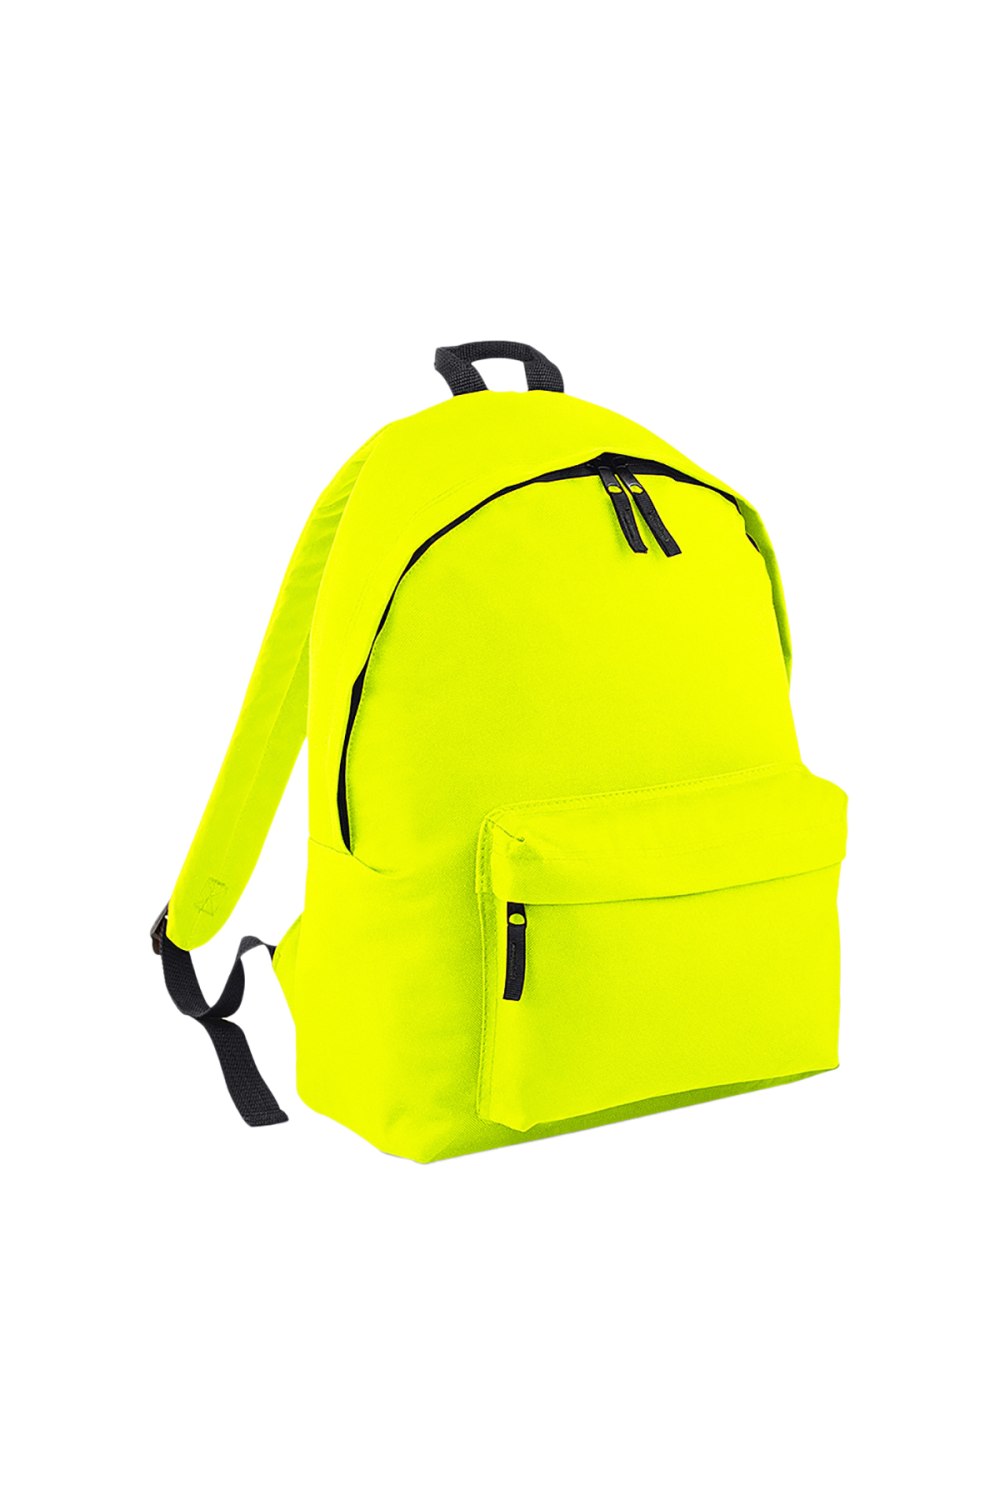 Fashion Backpack/Rucksack, 18 Liters - Fluoresent Yellow